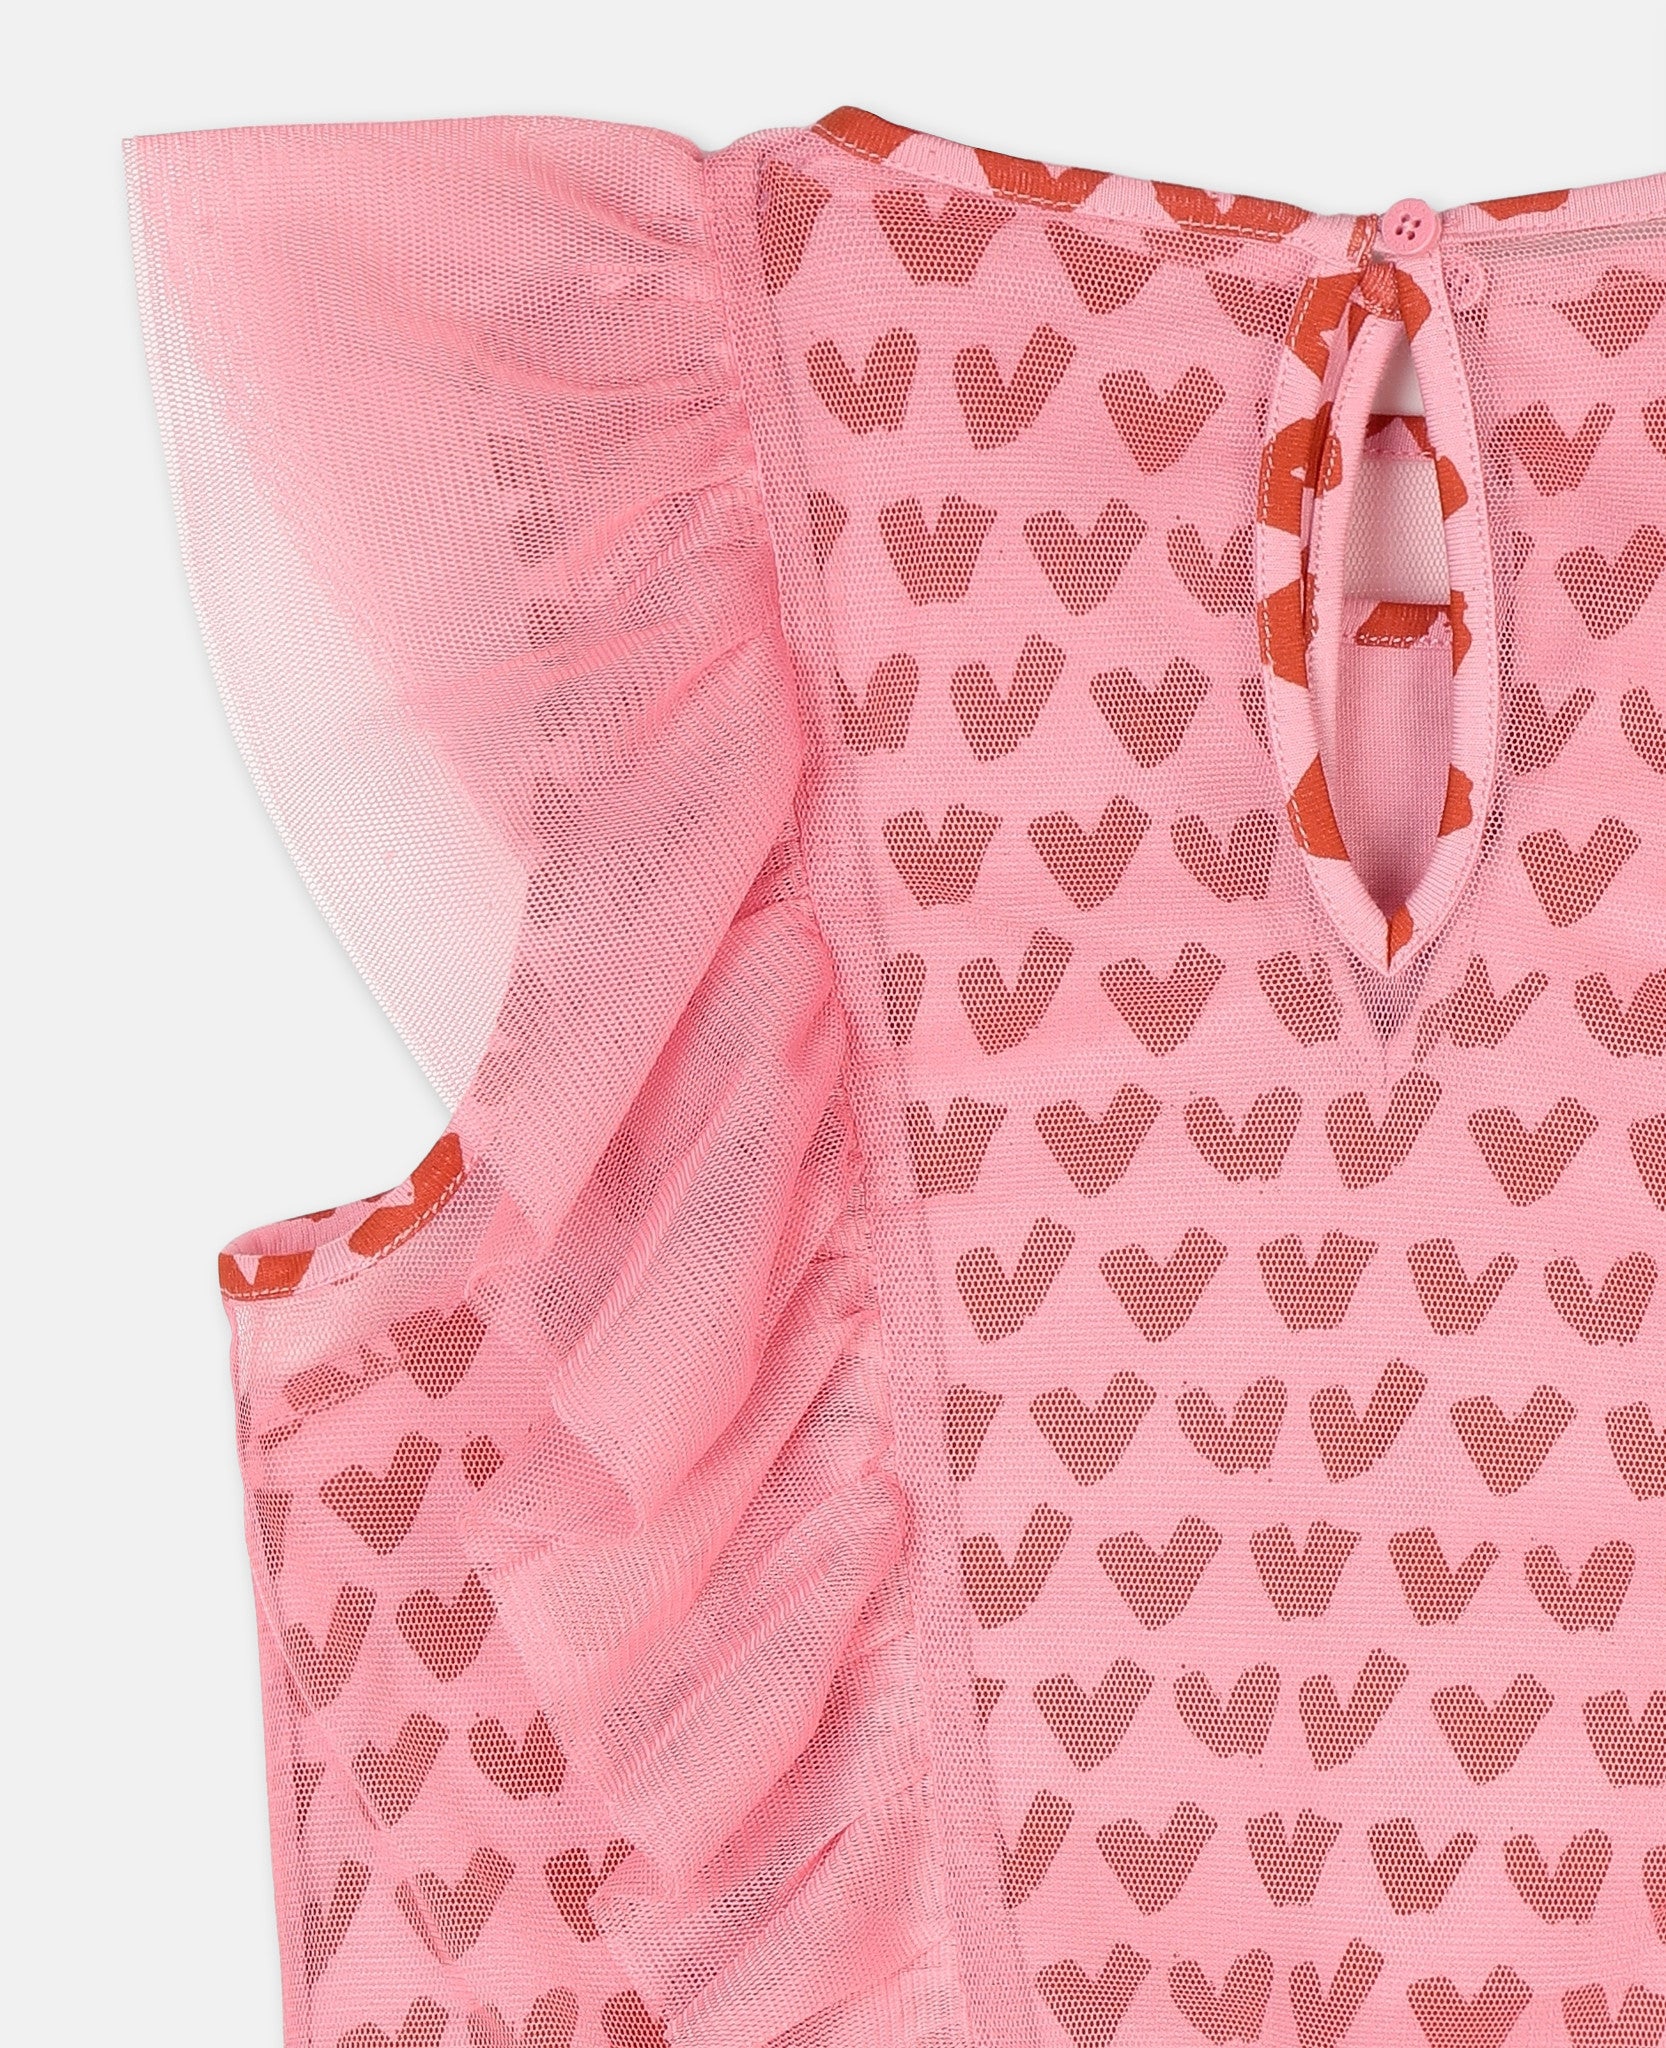 Girls Pink Heart Tulle Dress